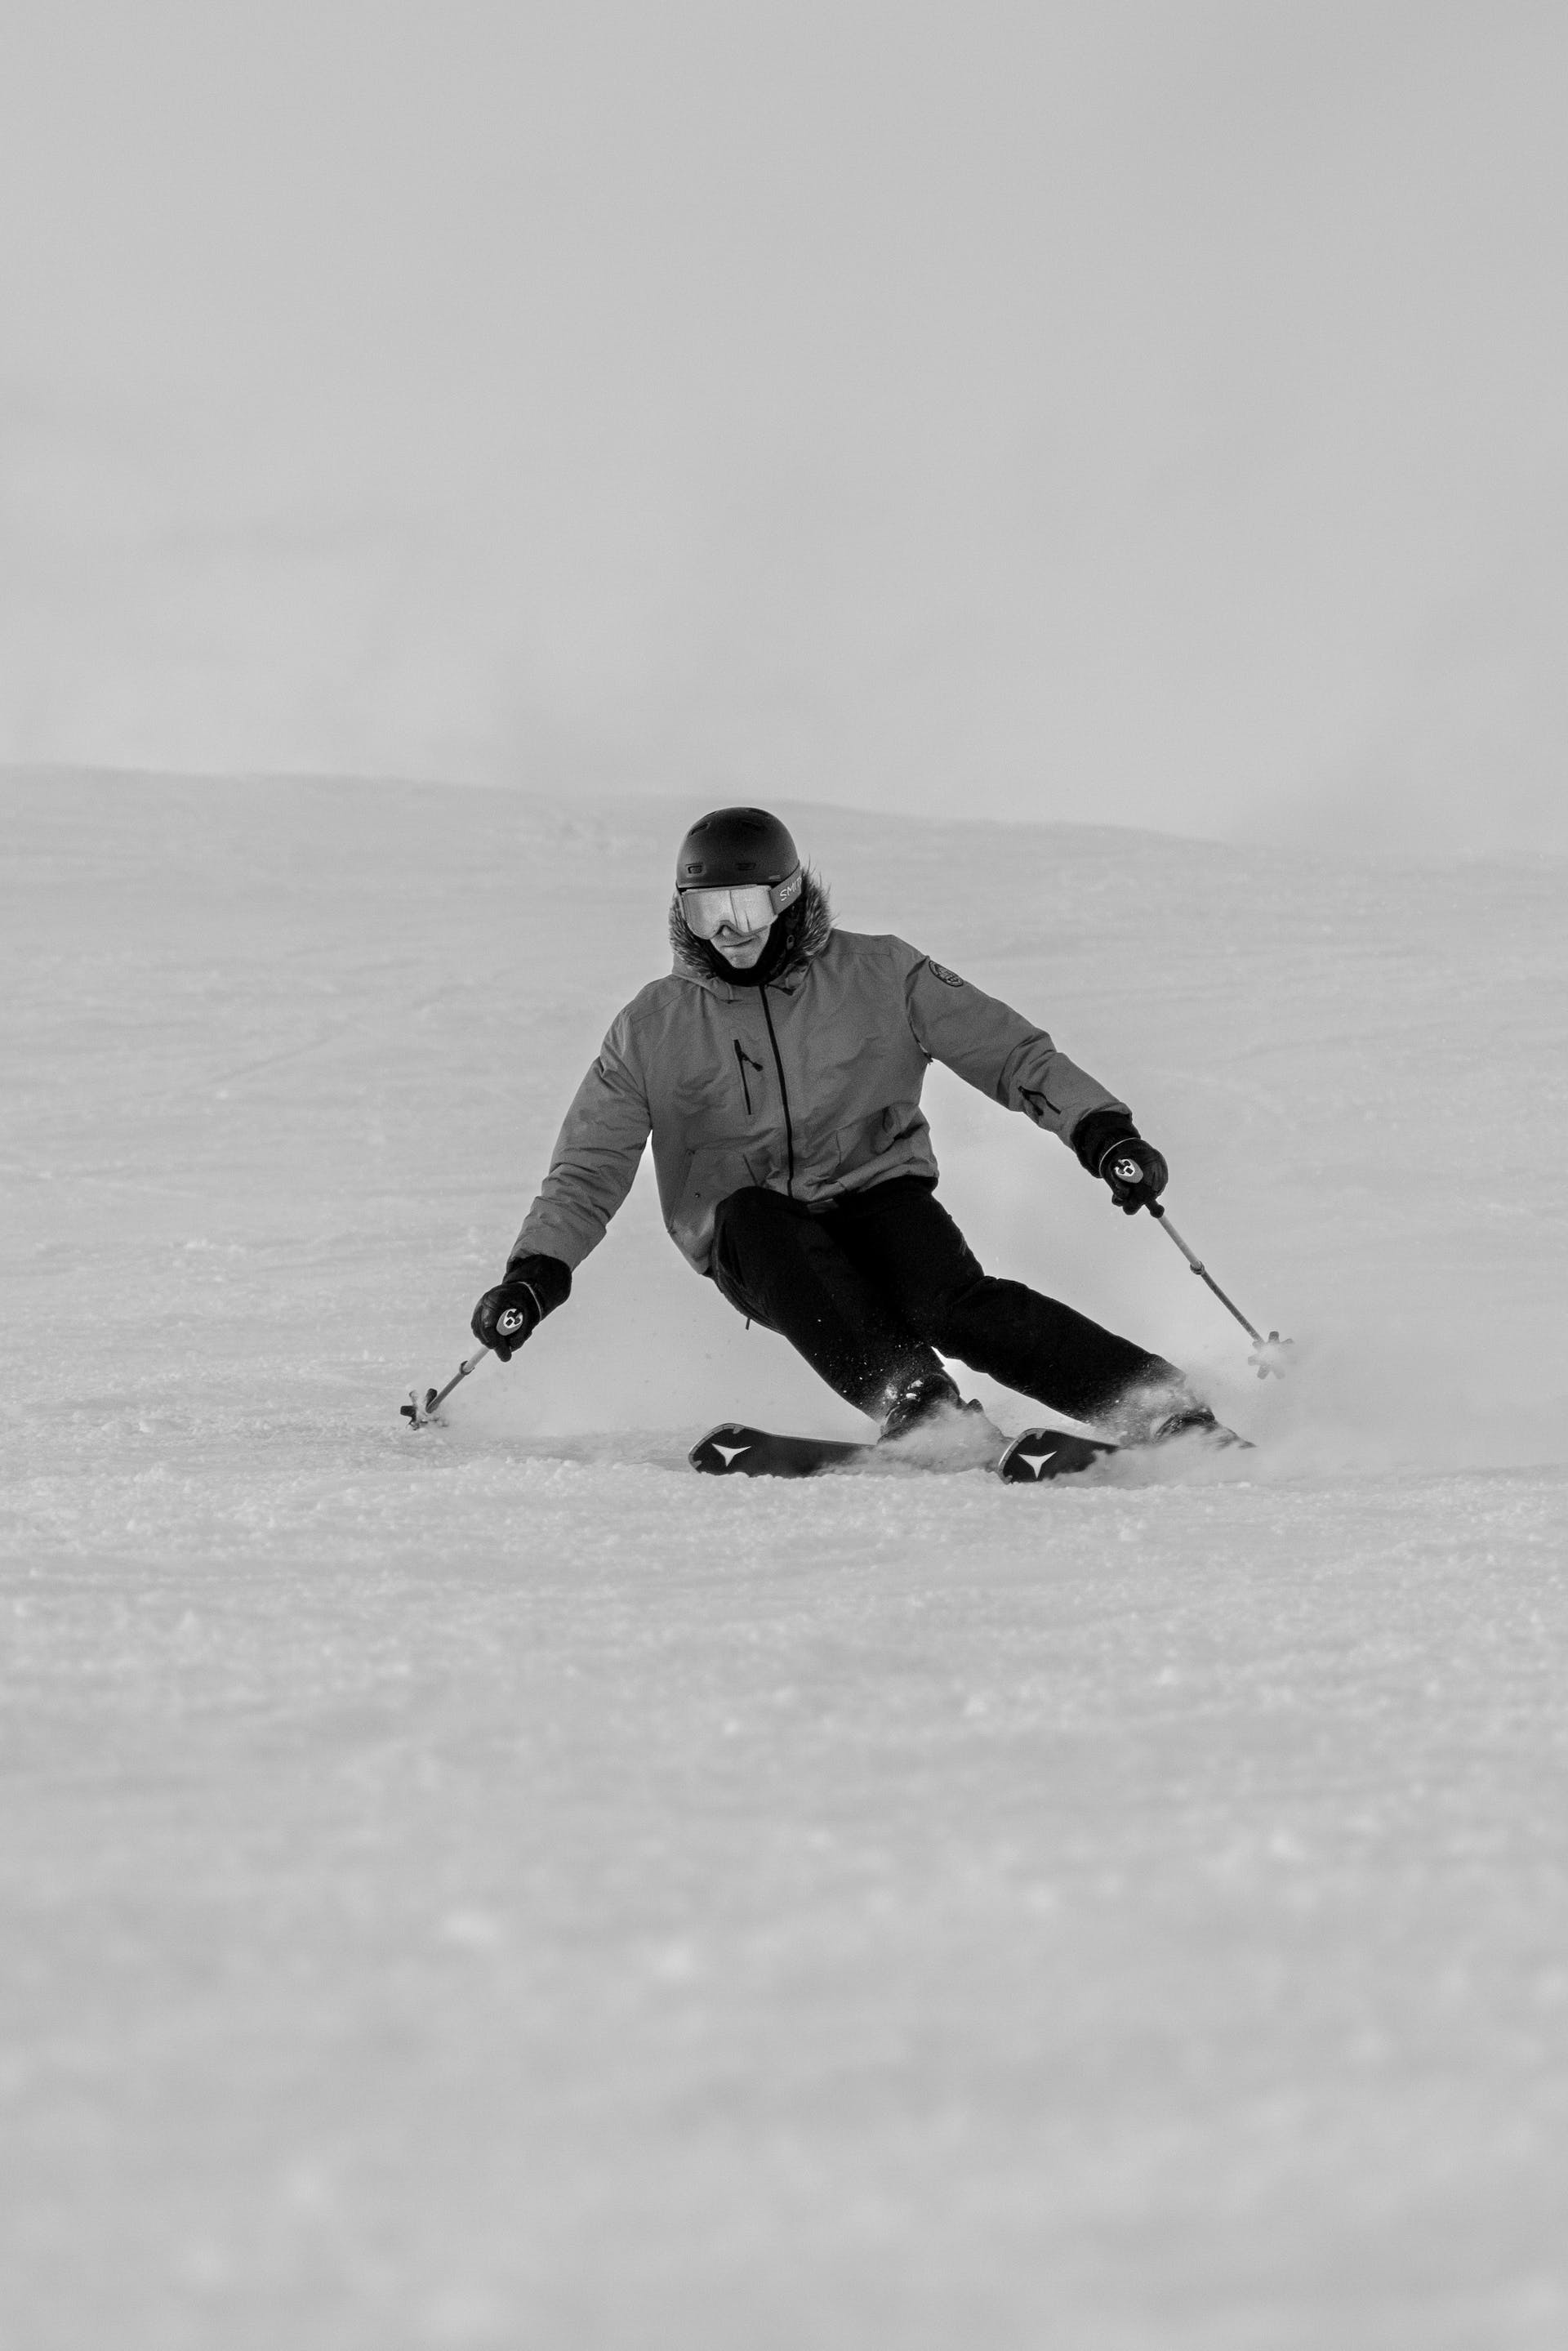 Downhill skiier